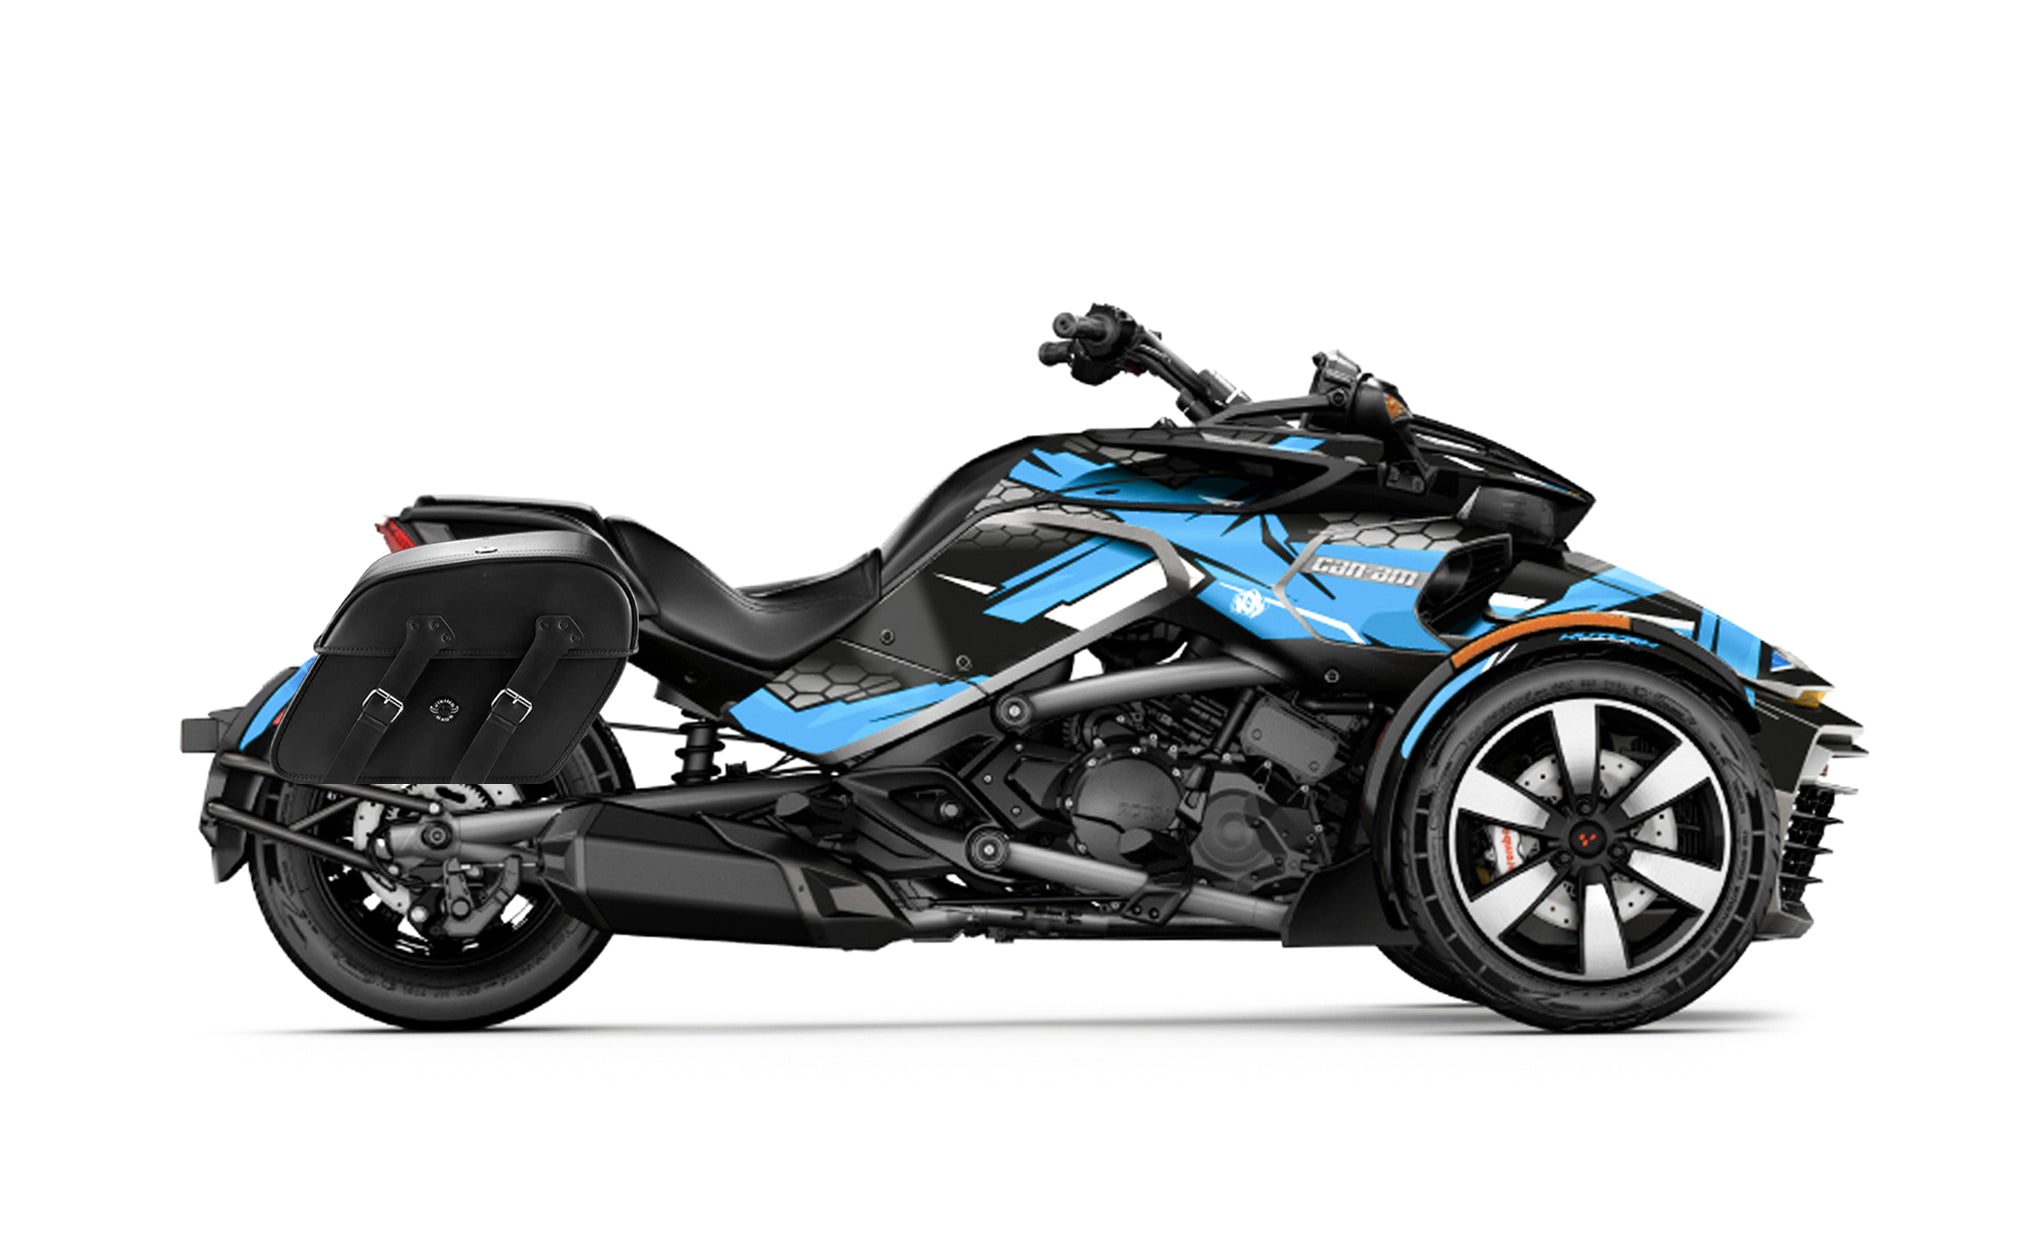 Viking Raven Large Can Am Spyder F3 Motorcycle Leather Saddlebags on Bike Photo @expand